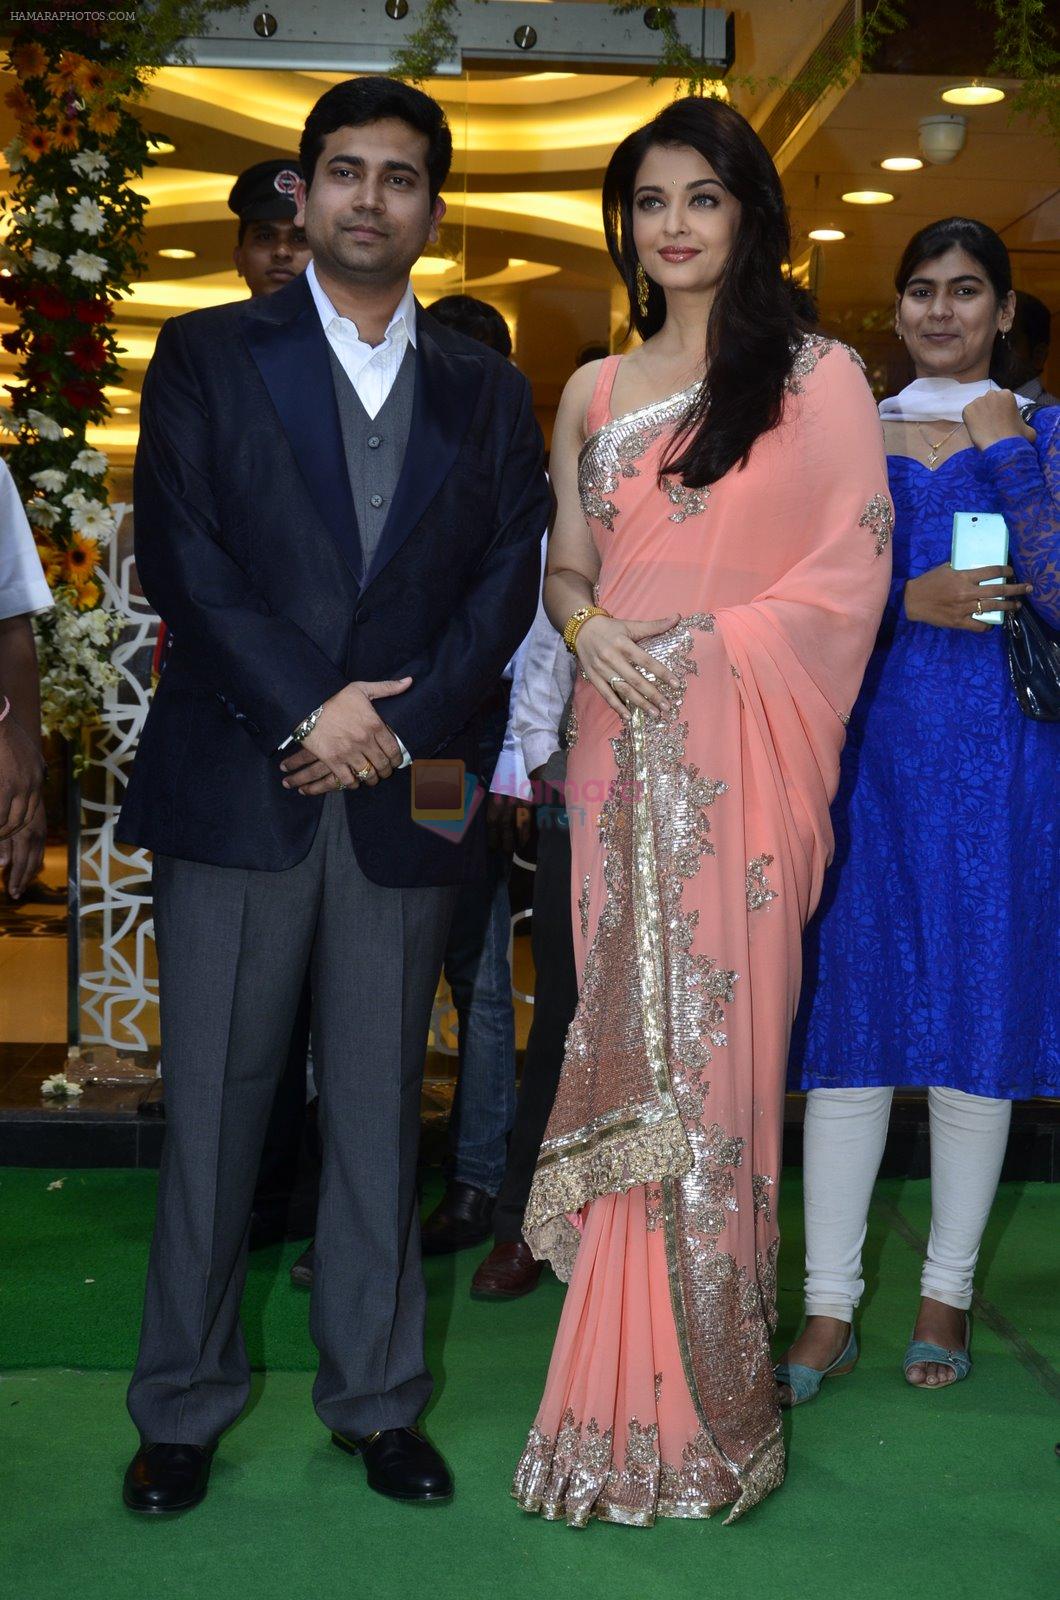 Aishwarya Rai Bachchan launches Kalyan store in Mumbai on 8th Nov 2014